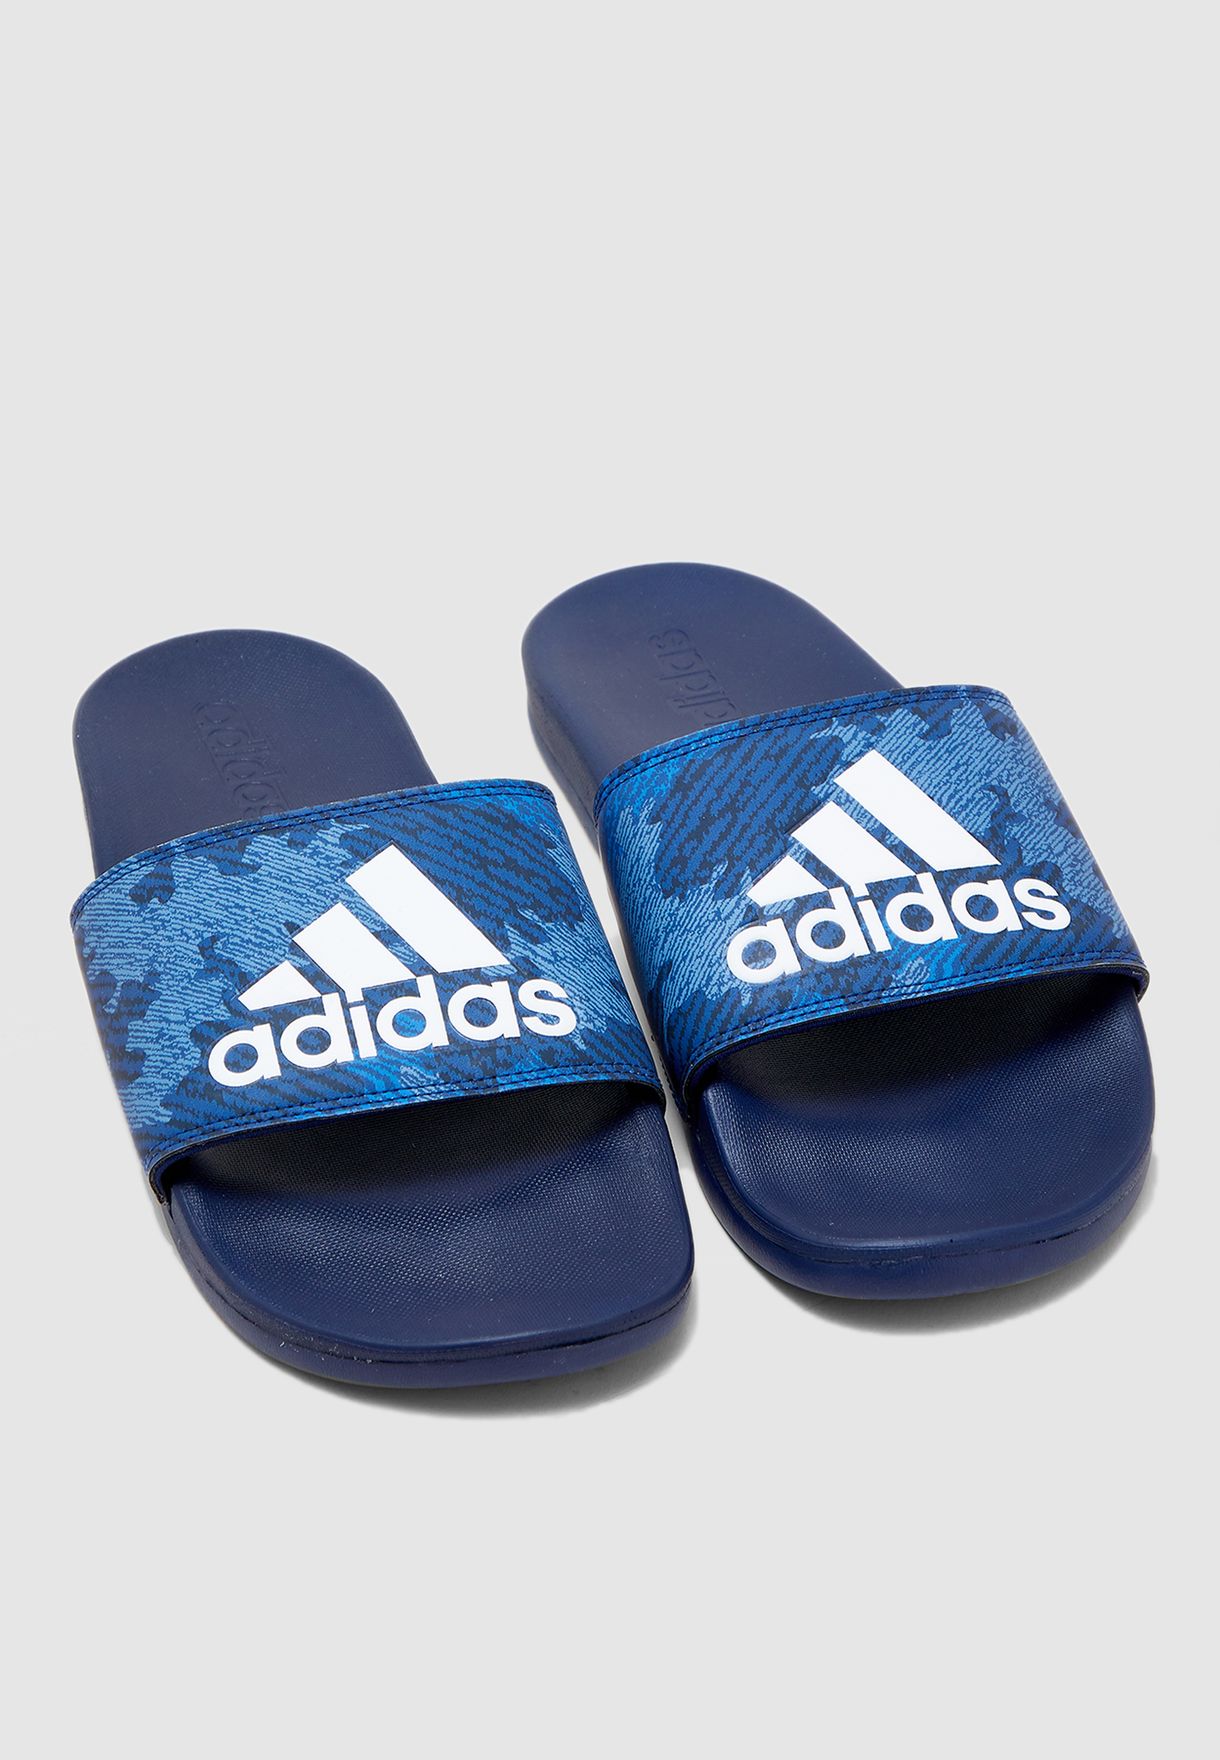 adidas comfort slides blue